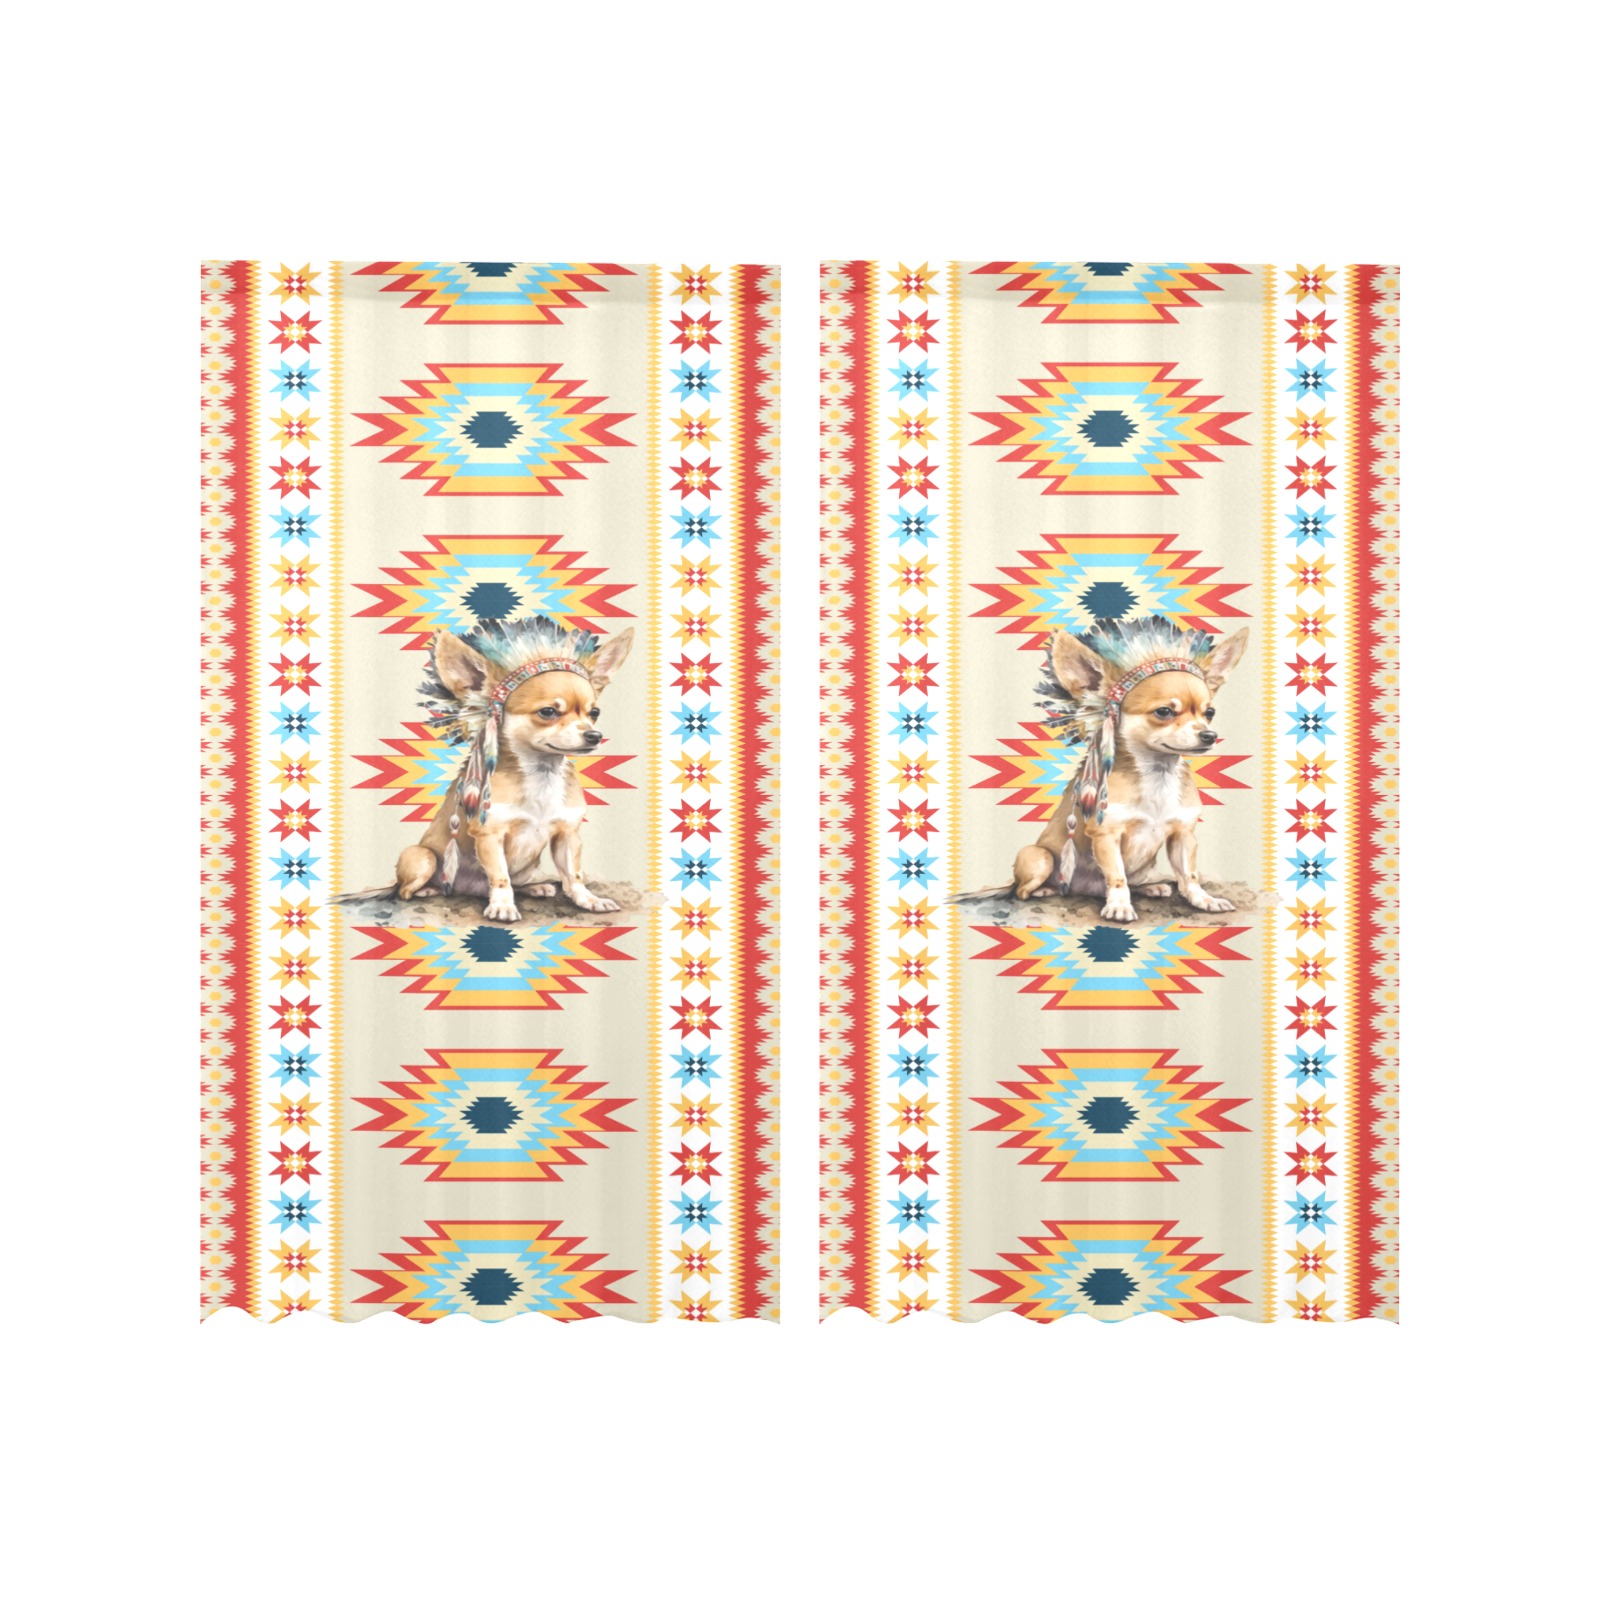 Native American Chihuahua Gauze Curtain 28"x63" (Two-Piece)